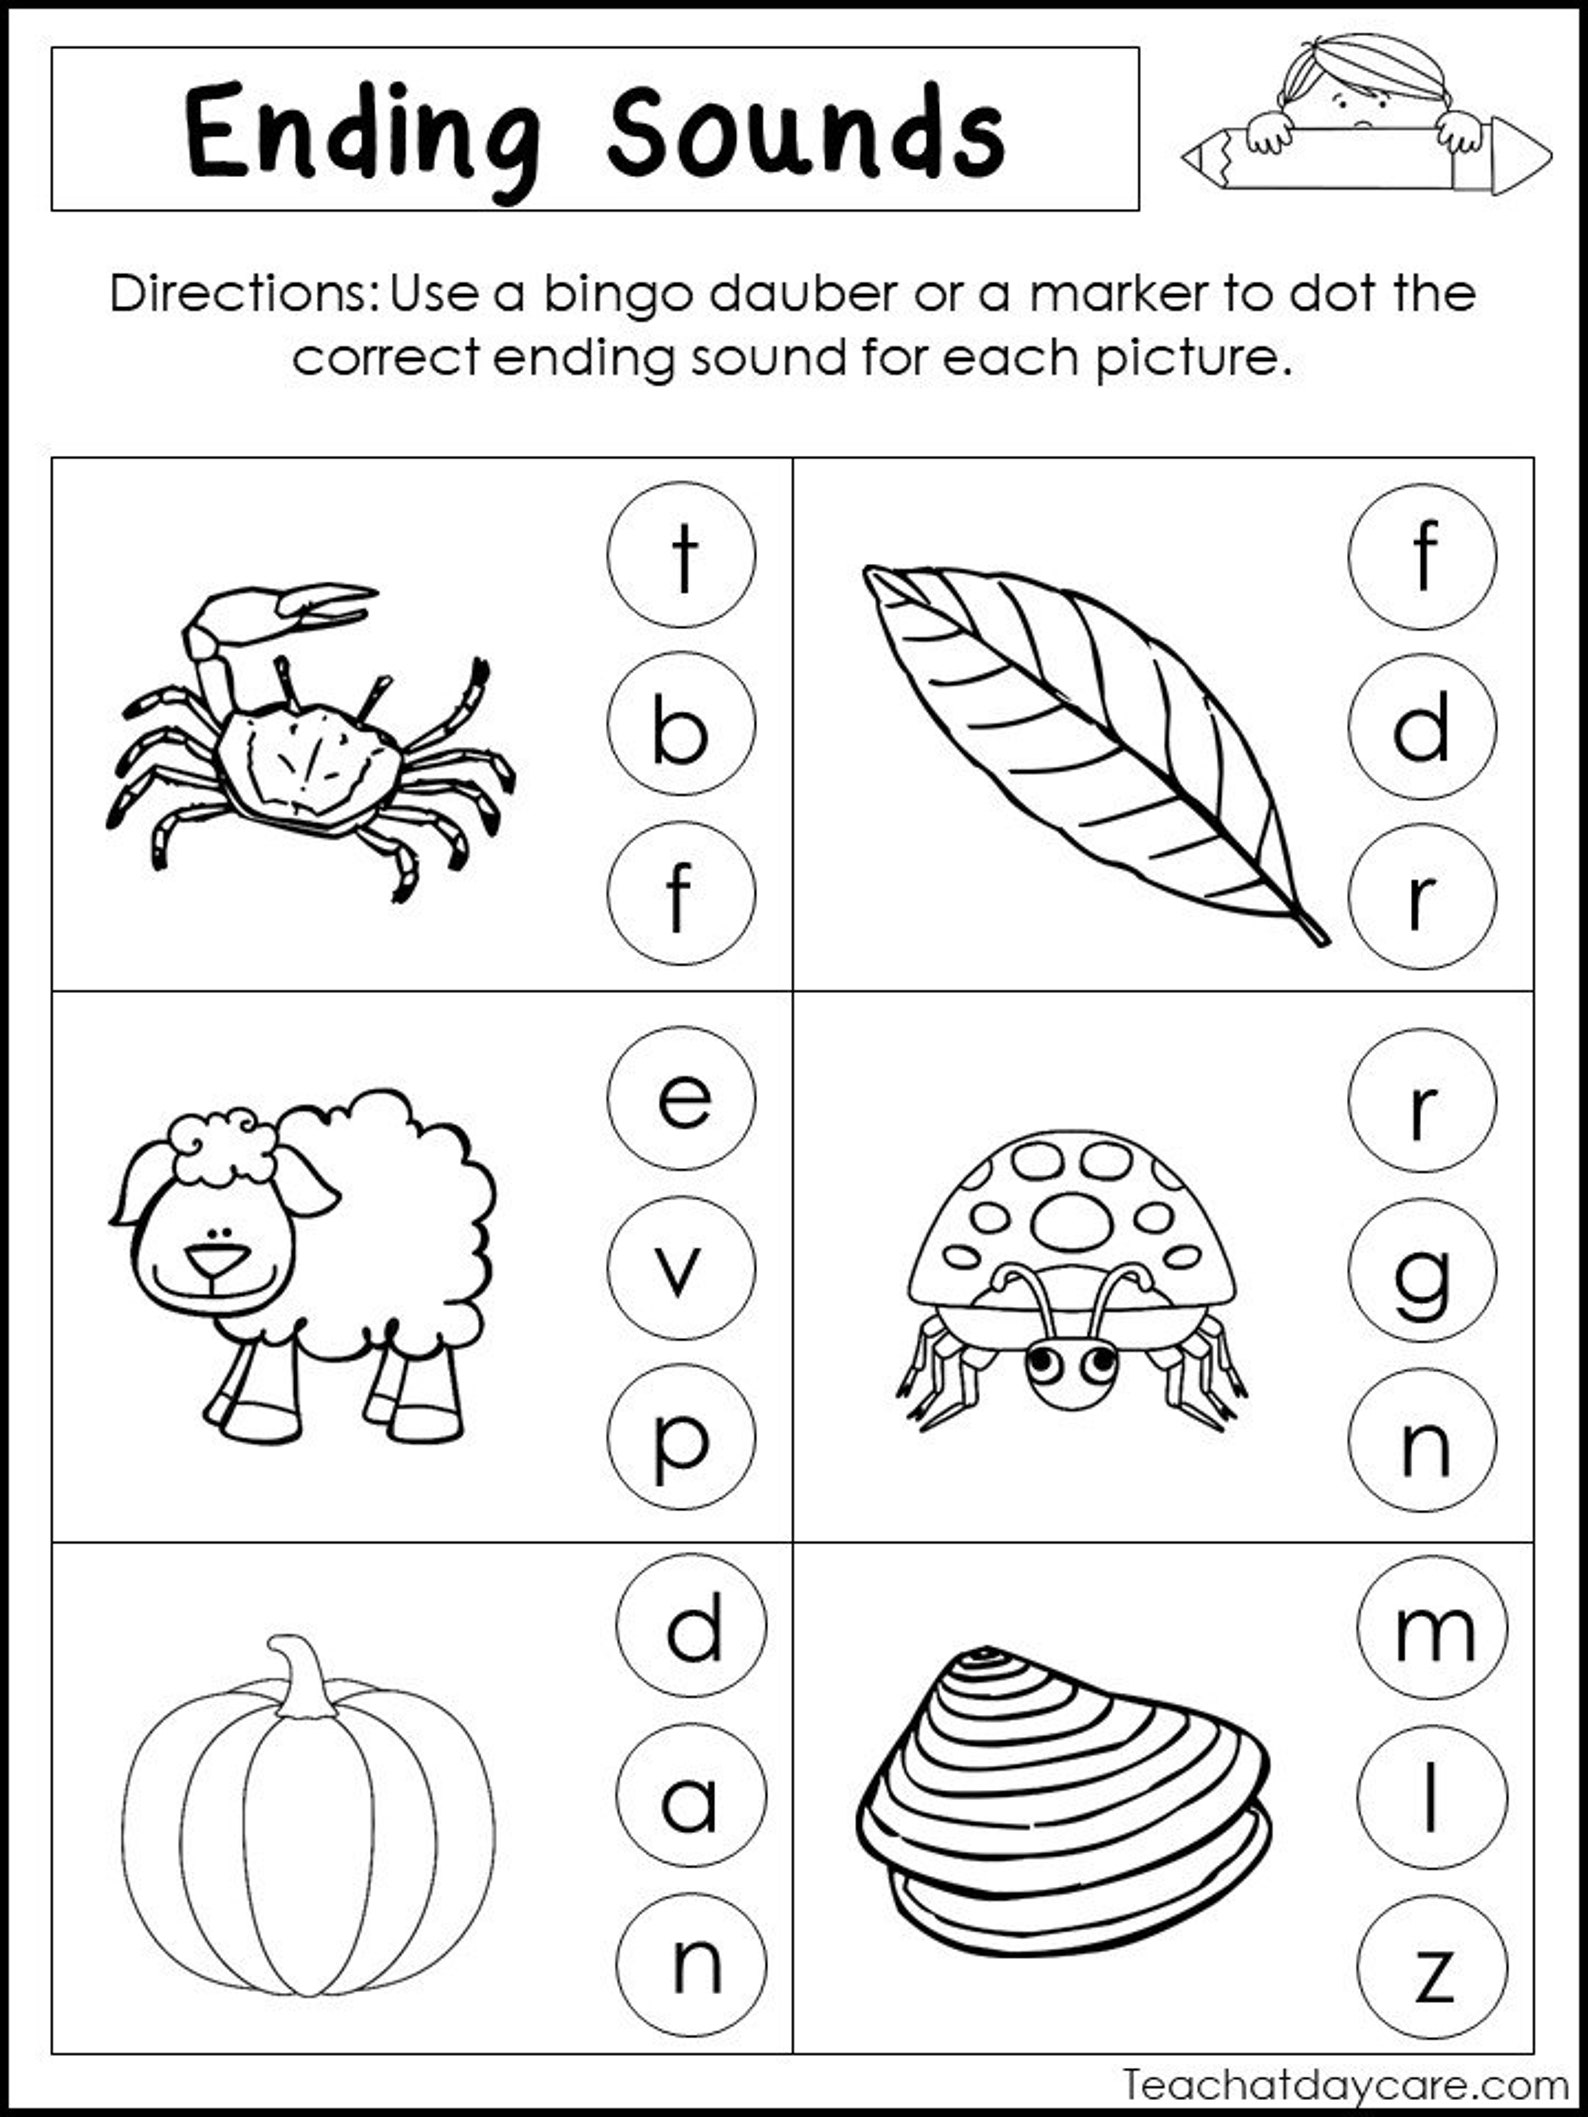 10-printable-ending-sounds-worksheets-preschool-1st-grade-etsy